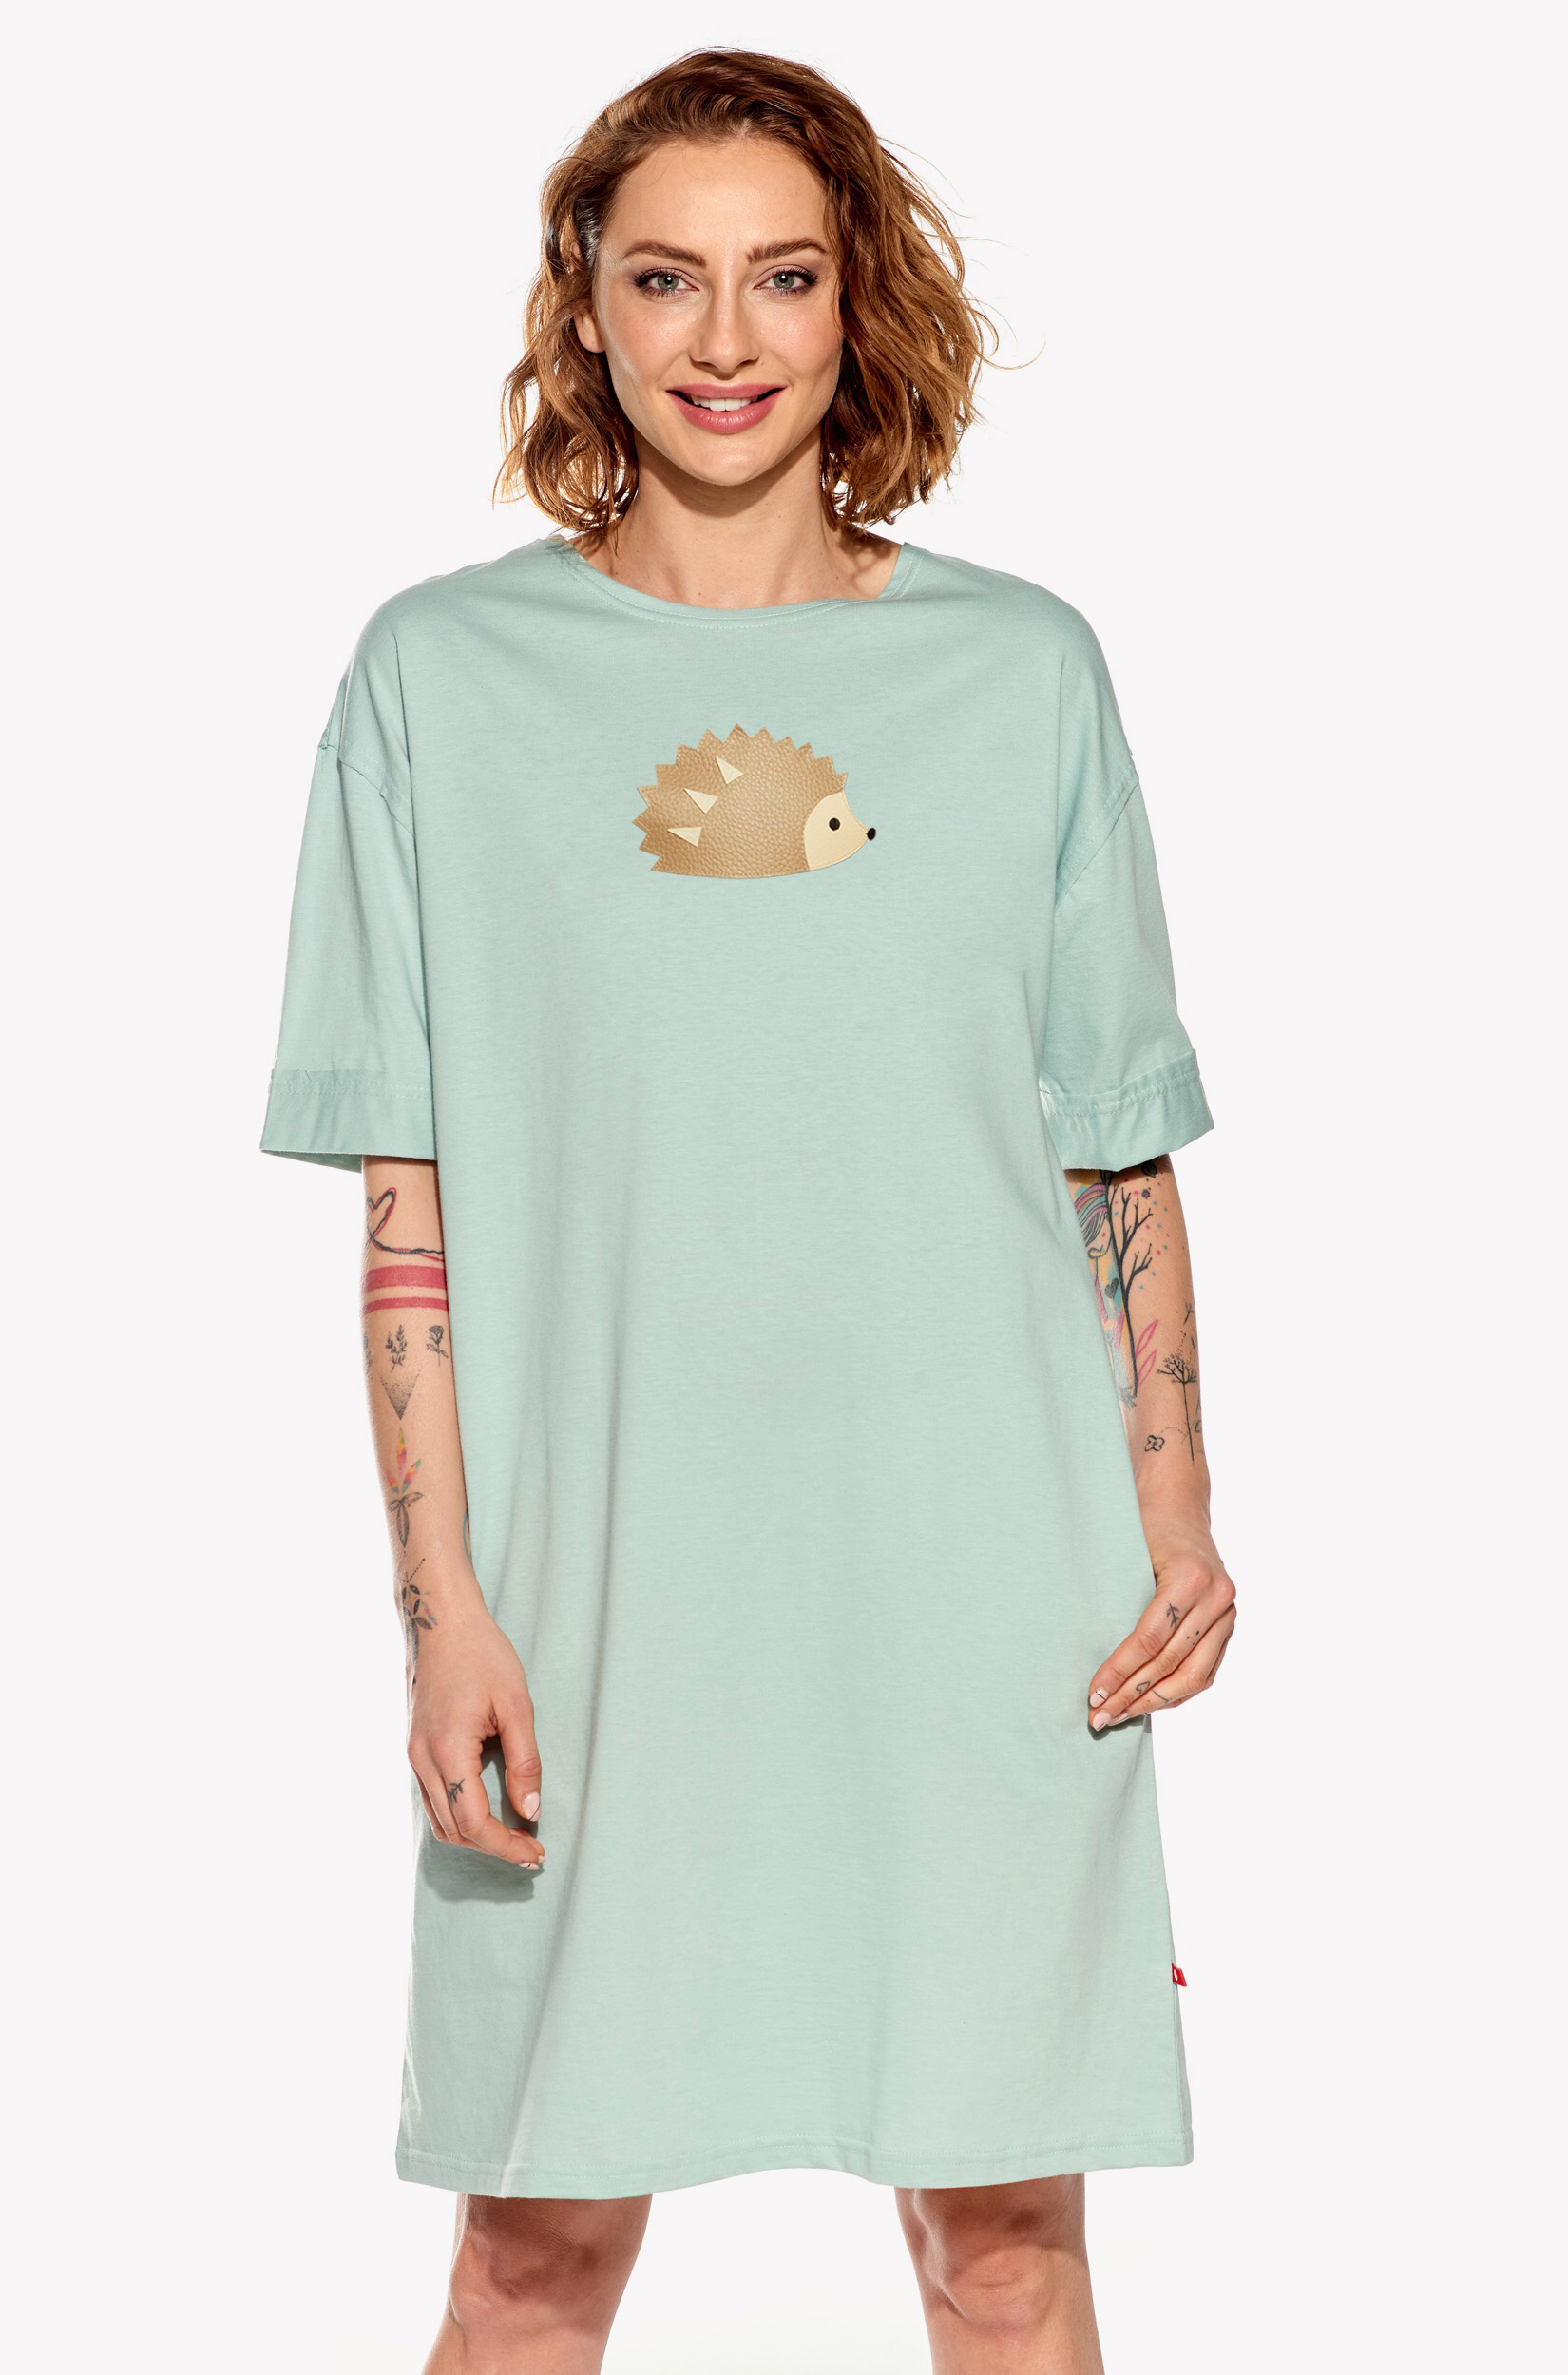 Dresses with hedgehog